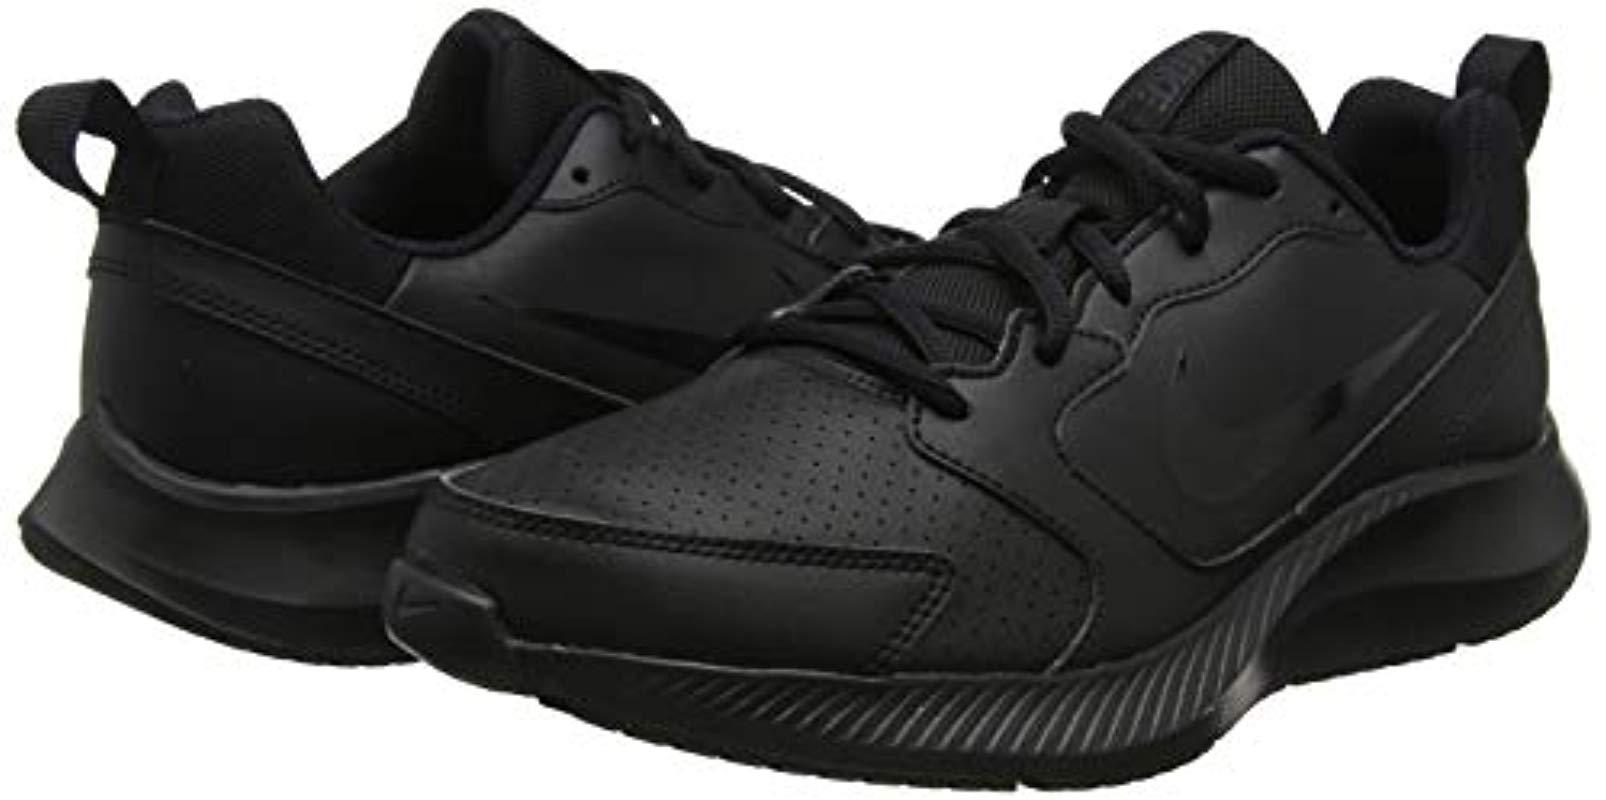 Nike Leather Todos Rn Shoe in Black/Black-Black-Anthracite (Black) | Lyst